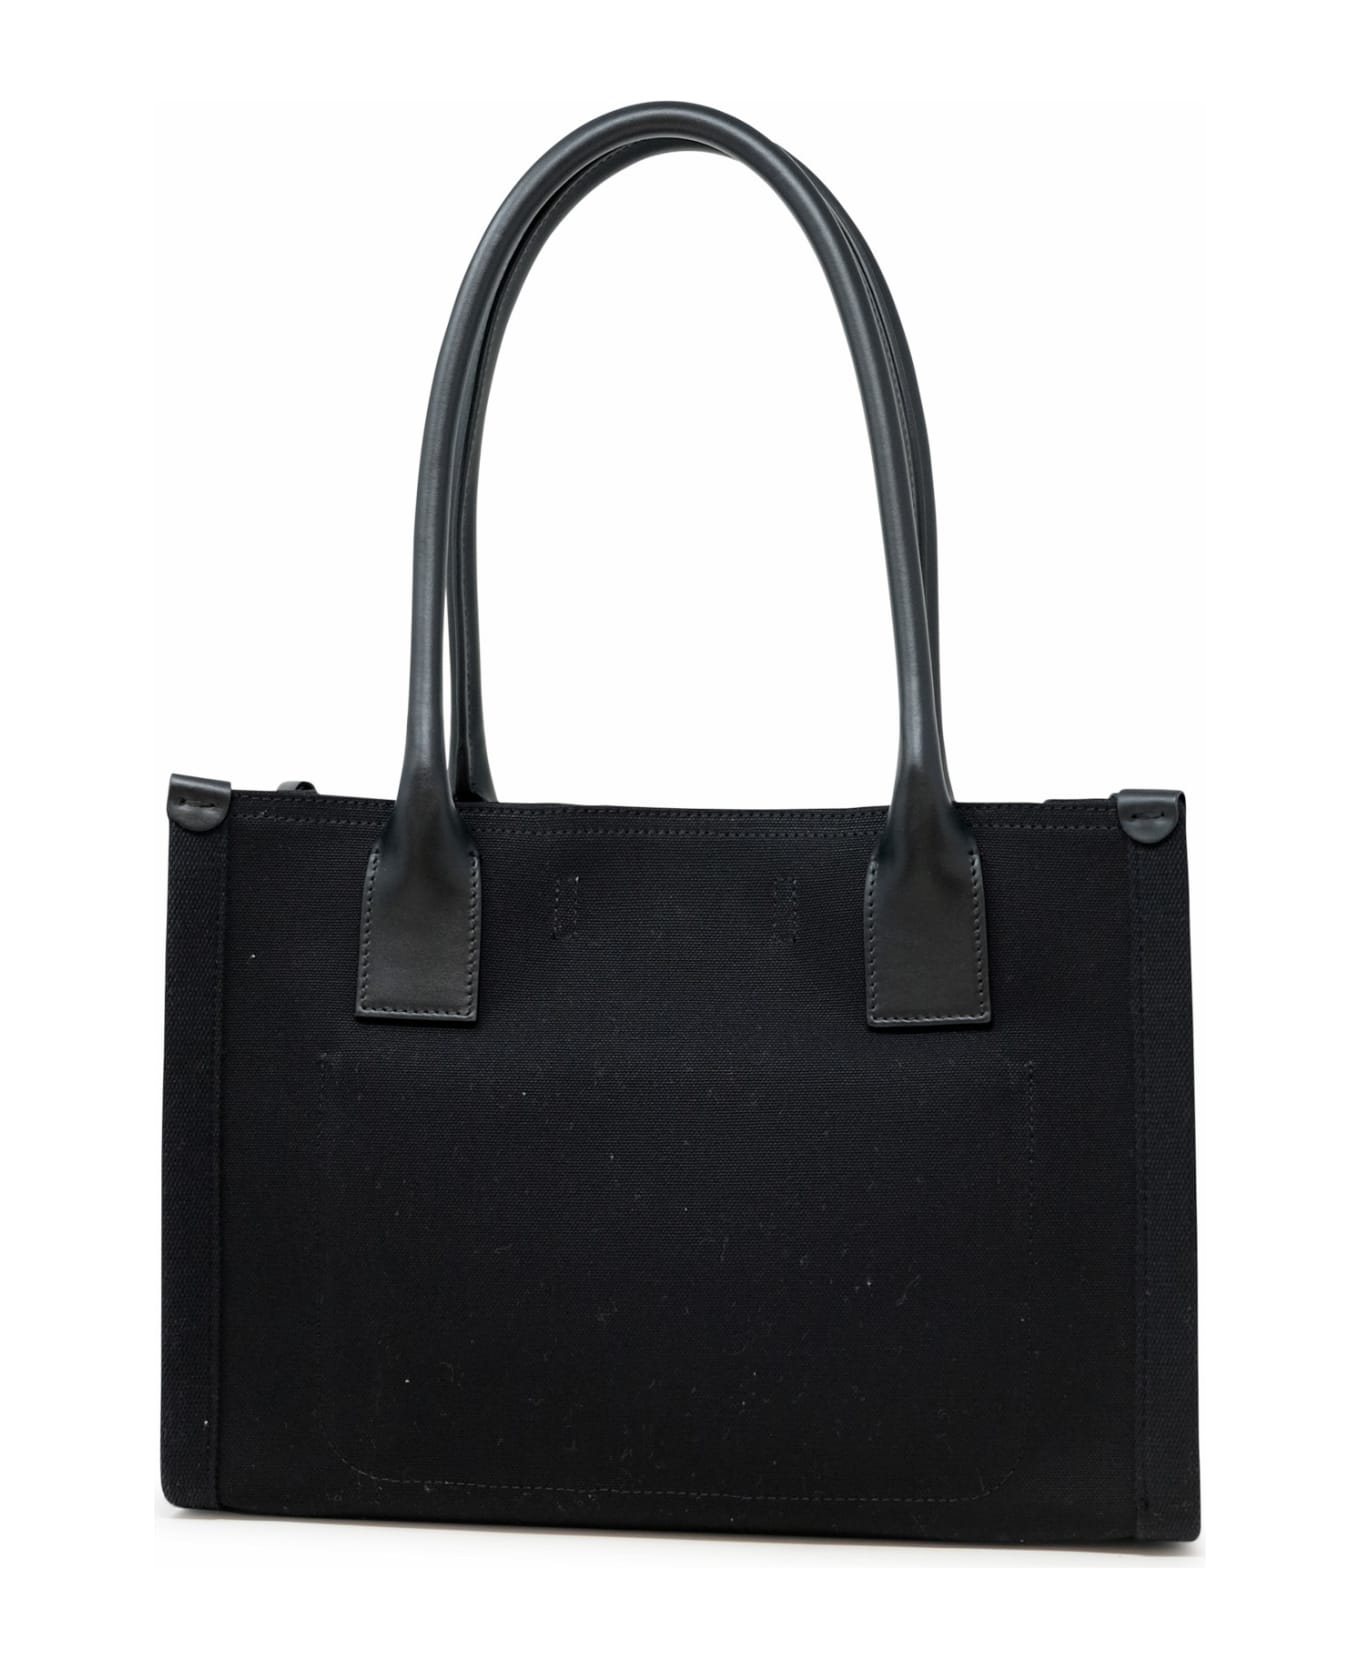 Christian Louboutin 'nastroloubi E/w Small' Shopping Bag